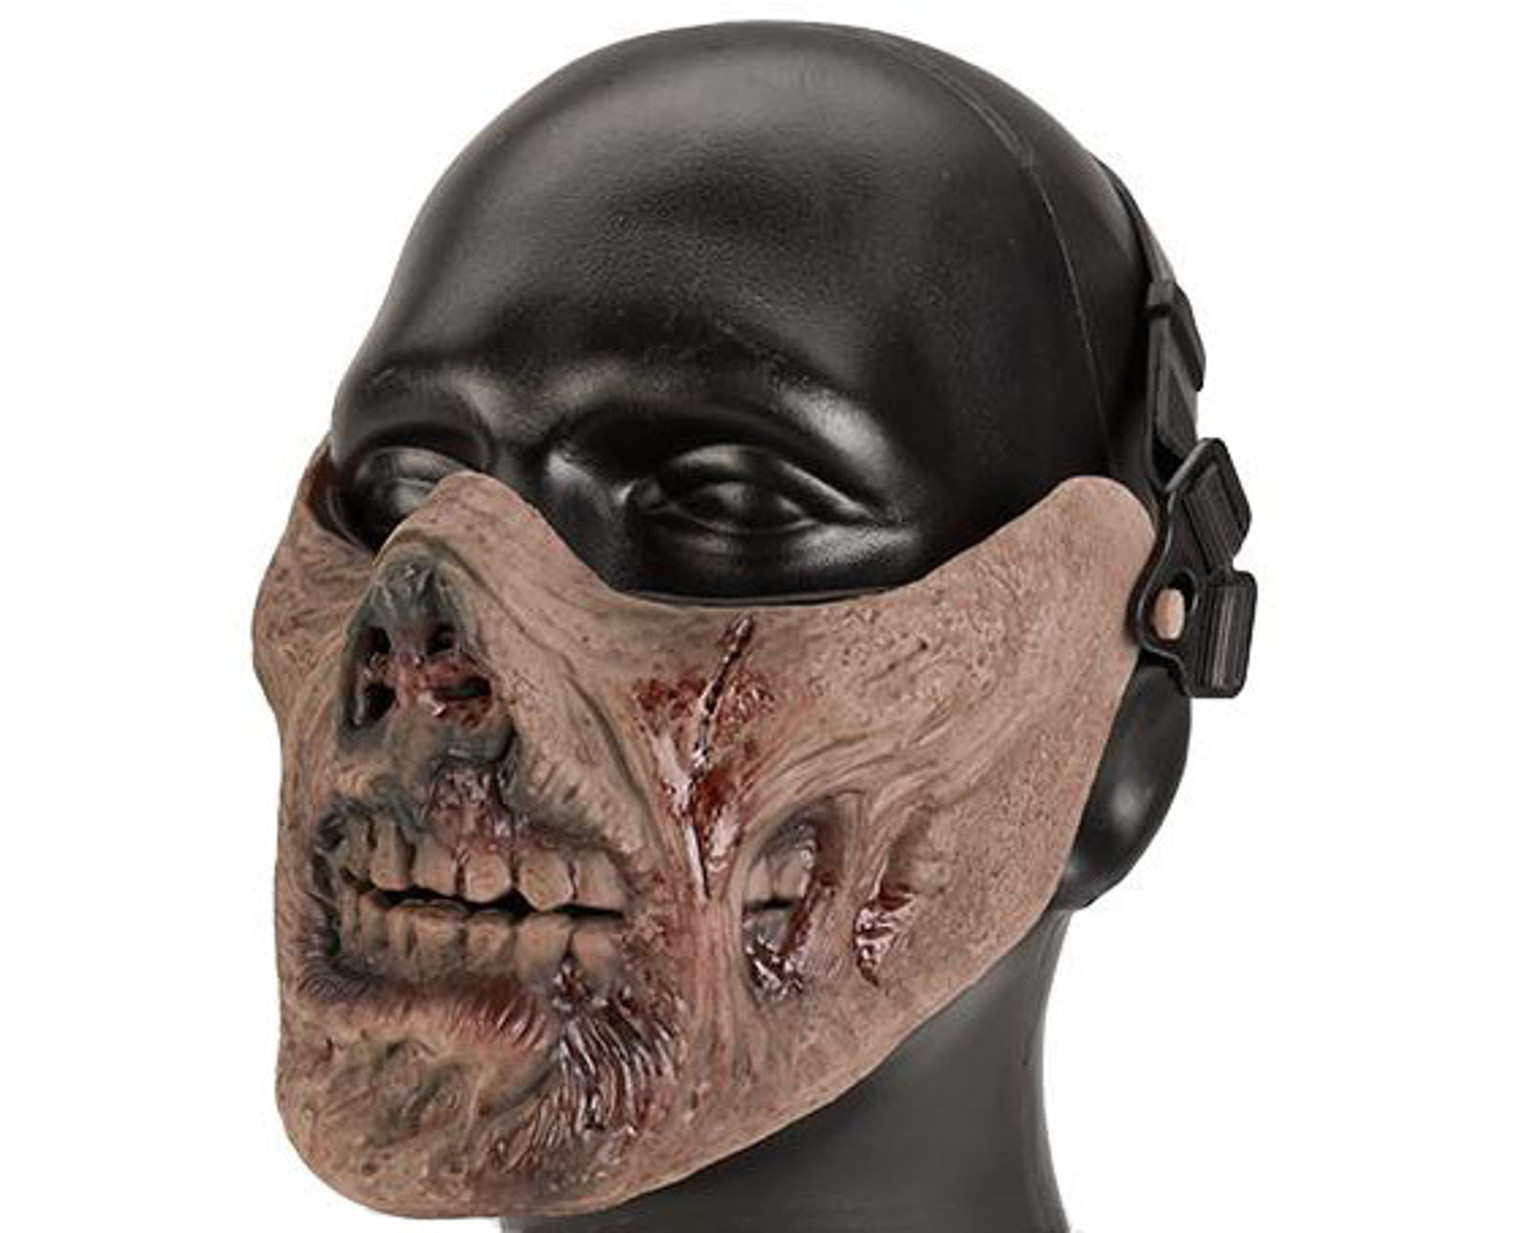 Avengers "Zombie" Iron Face Lower Half Mask - Flesh Wound